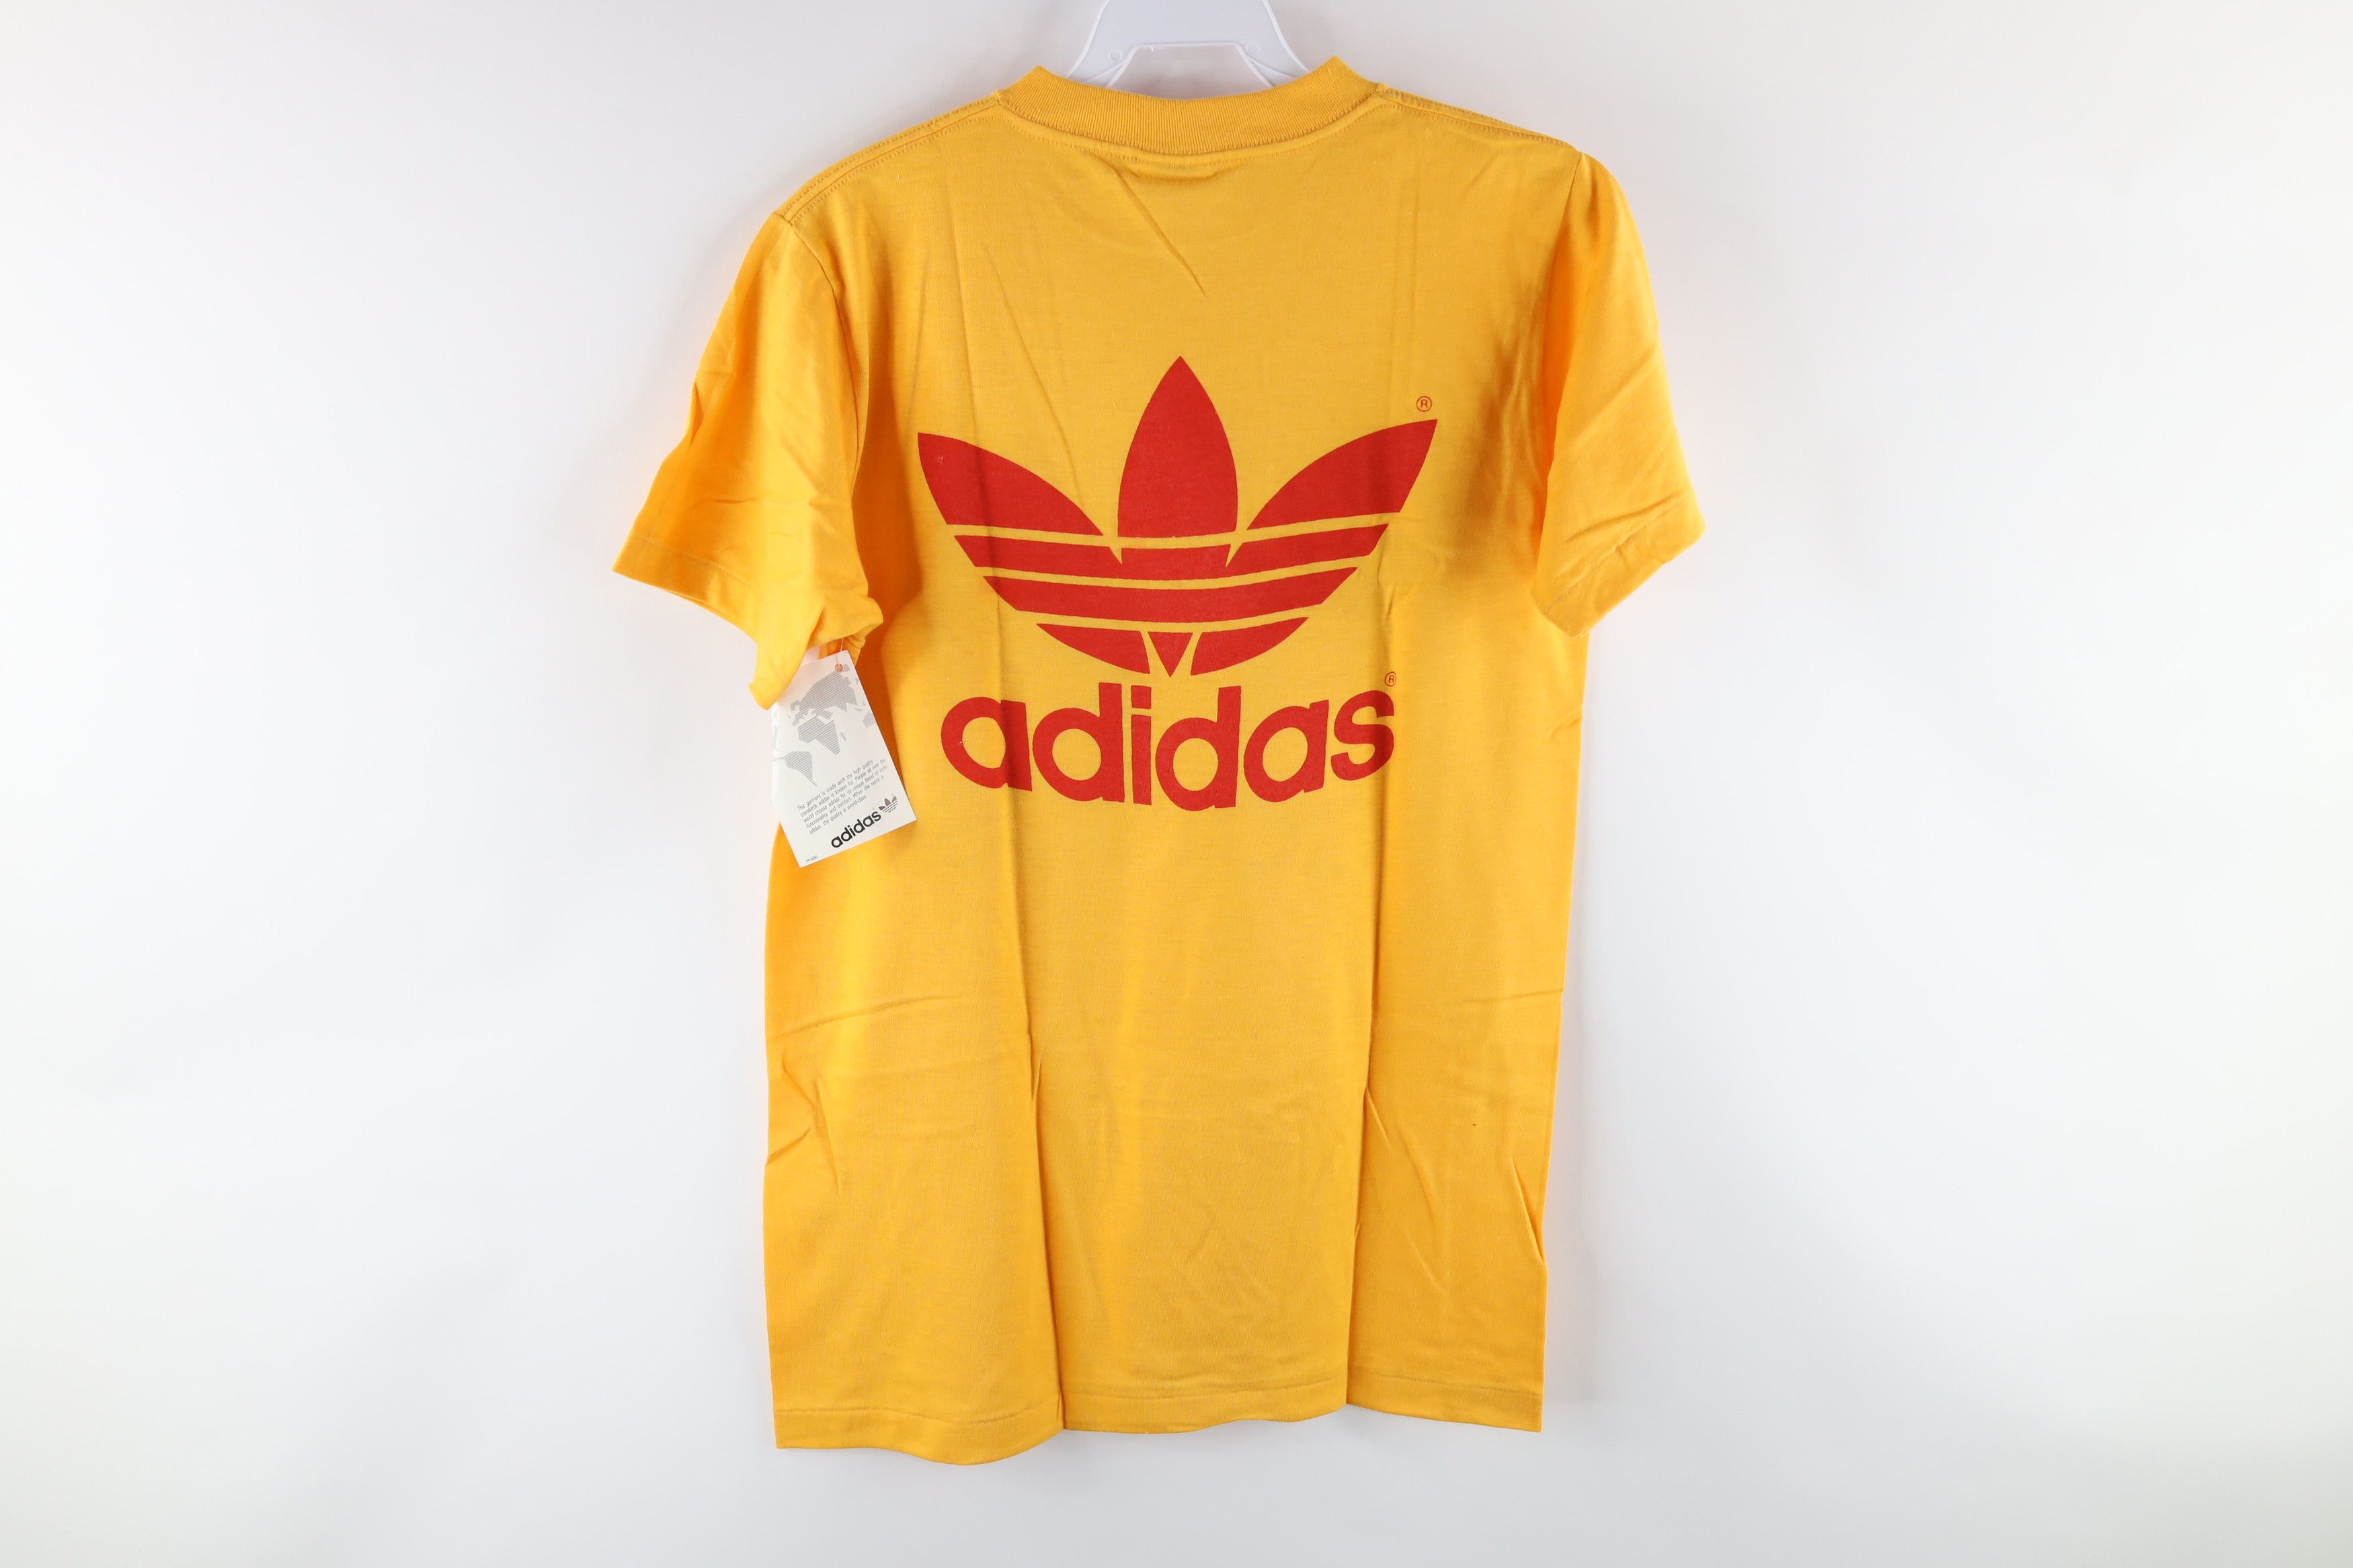 Adidas NOS Vintage 80s Adidas Trefoil 1988 Olympics T-Shirt Yellow Size US S / EU 44-46 / 1 - 7 Thumbnail